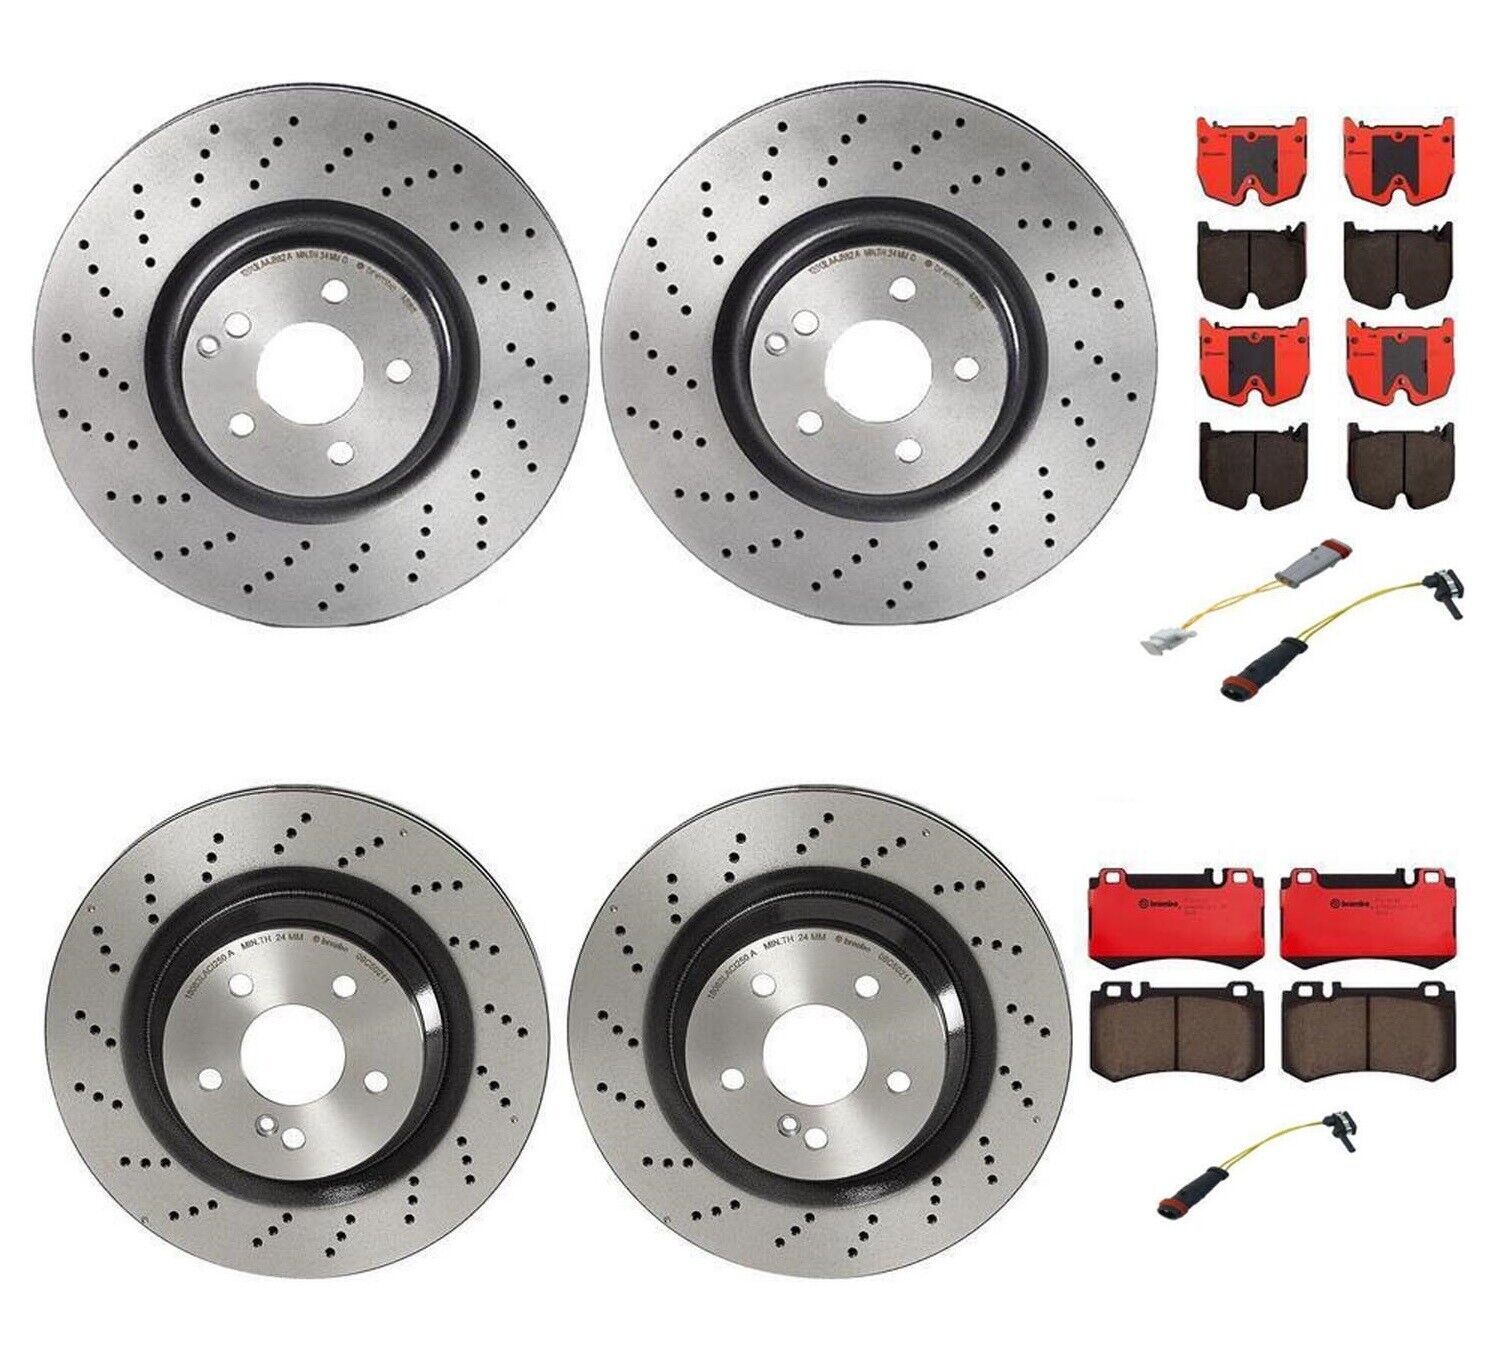 Brembo Front Rear Brake Kit Disc Rotors Ceramic Pads Sensors for MB W211 E55 AMG